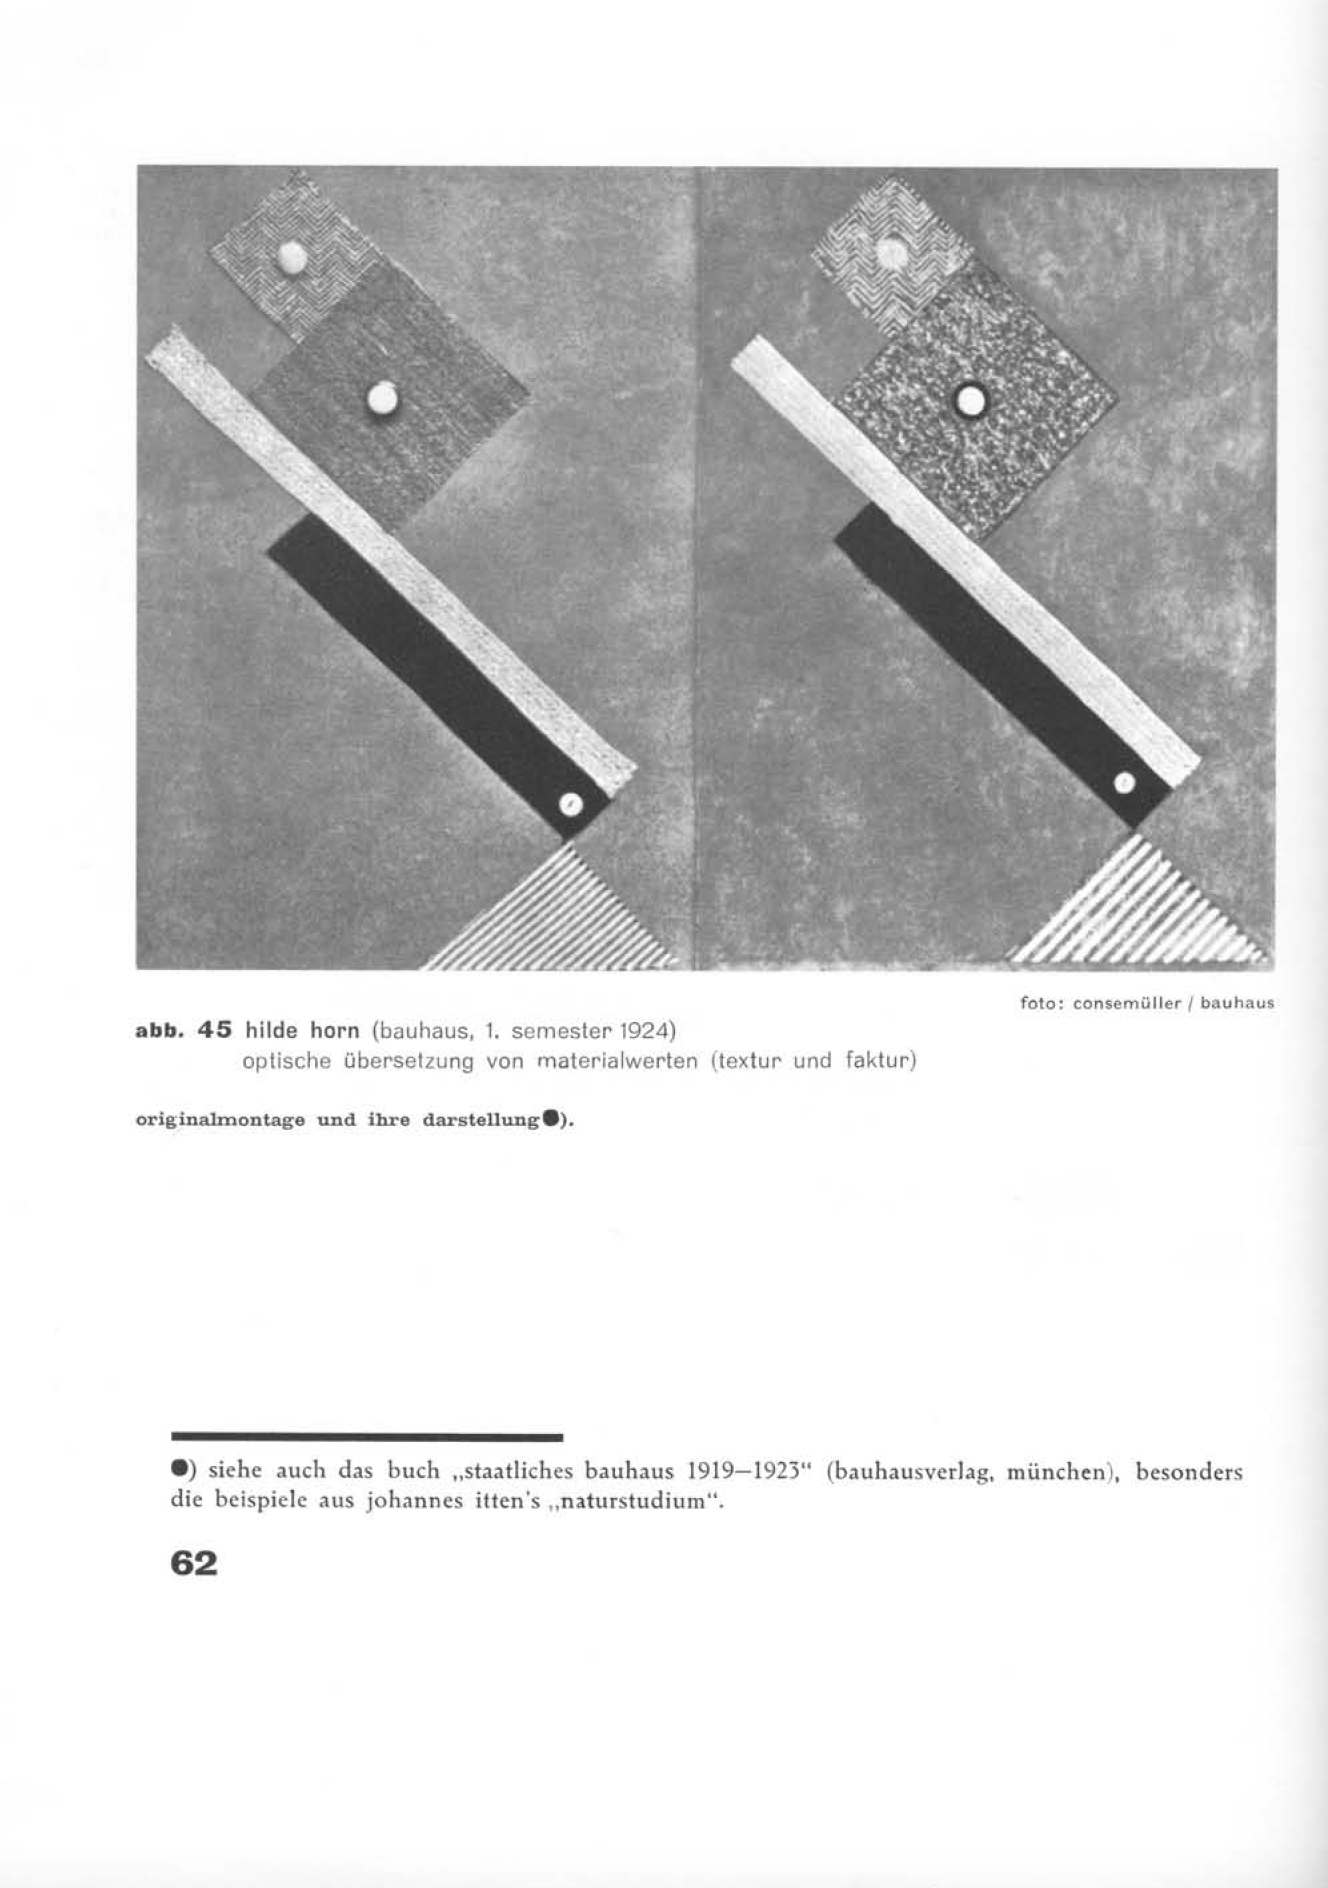 Hilde Horn, optische Übersetzung von Materialwerten Abb. Baushausbuch 14